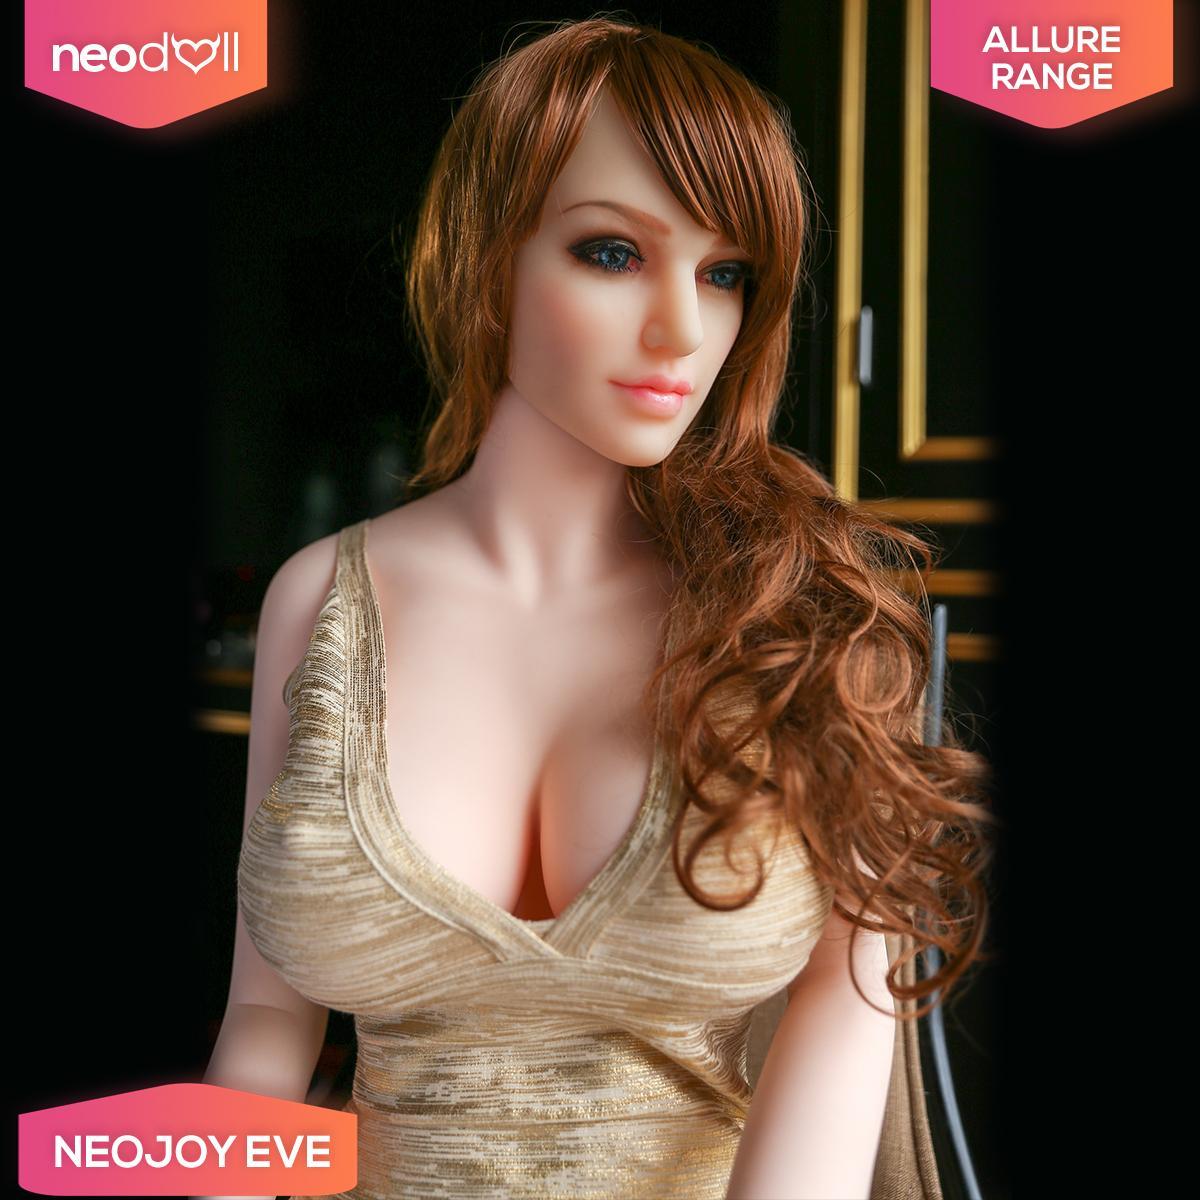 Neodoll Allure Eve - Realistic Sex Doll -165cm